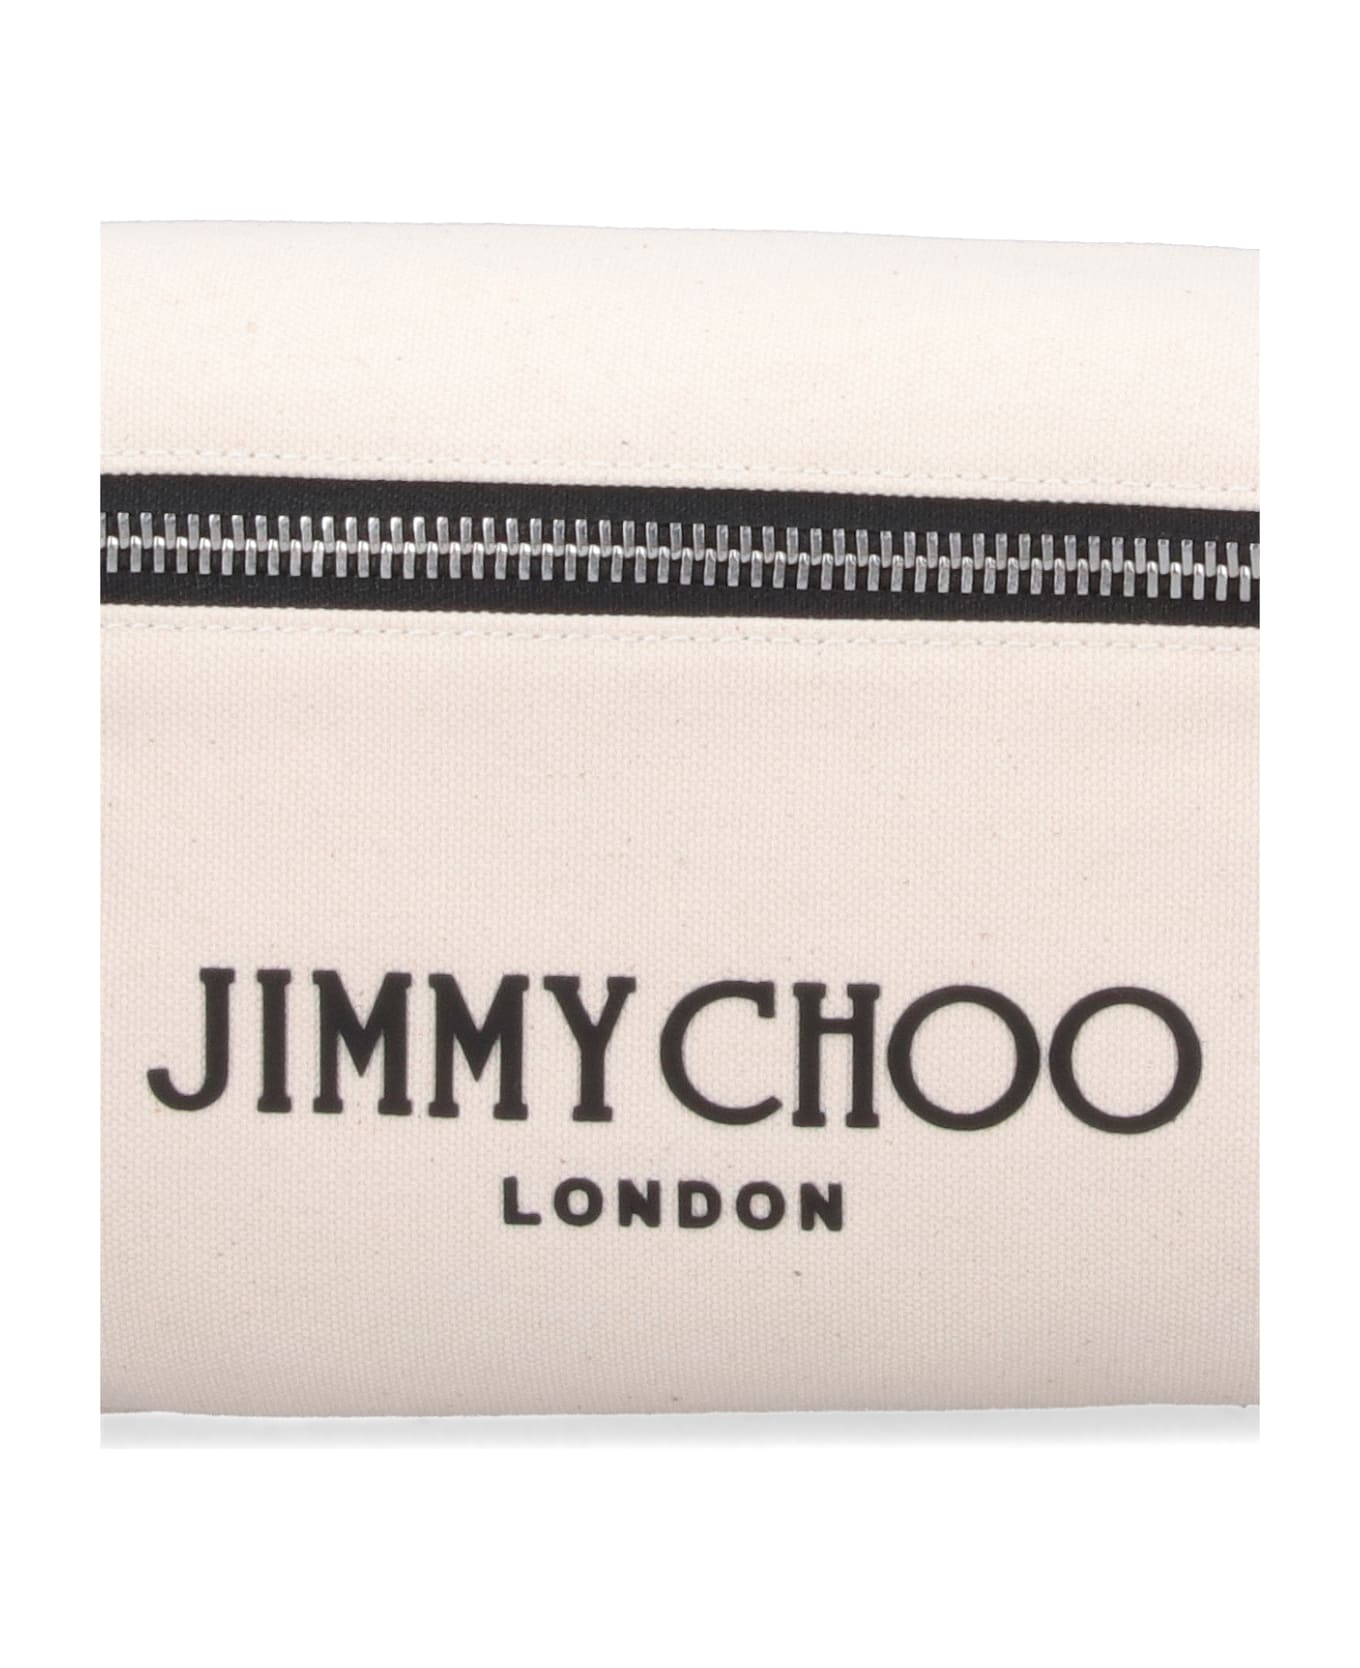 Jimmy Choo "finsley" Belt Bag - Beige